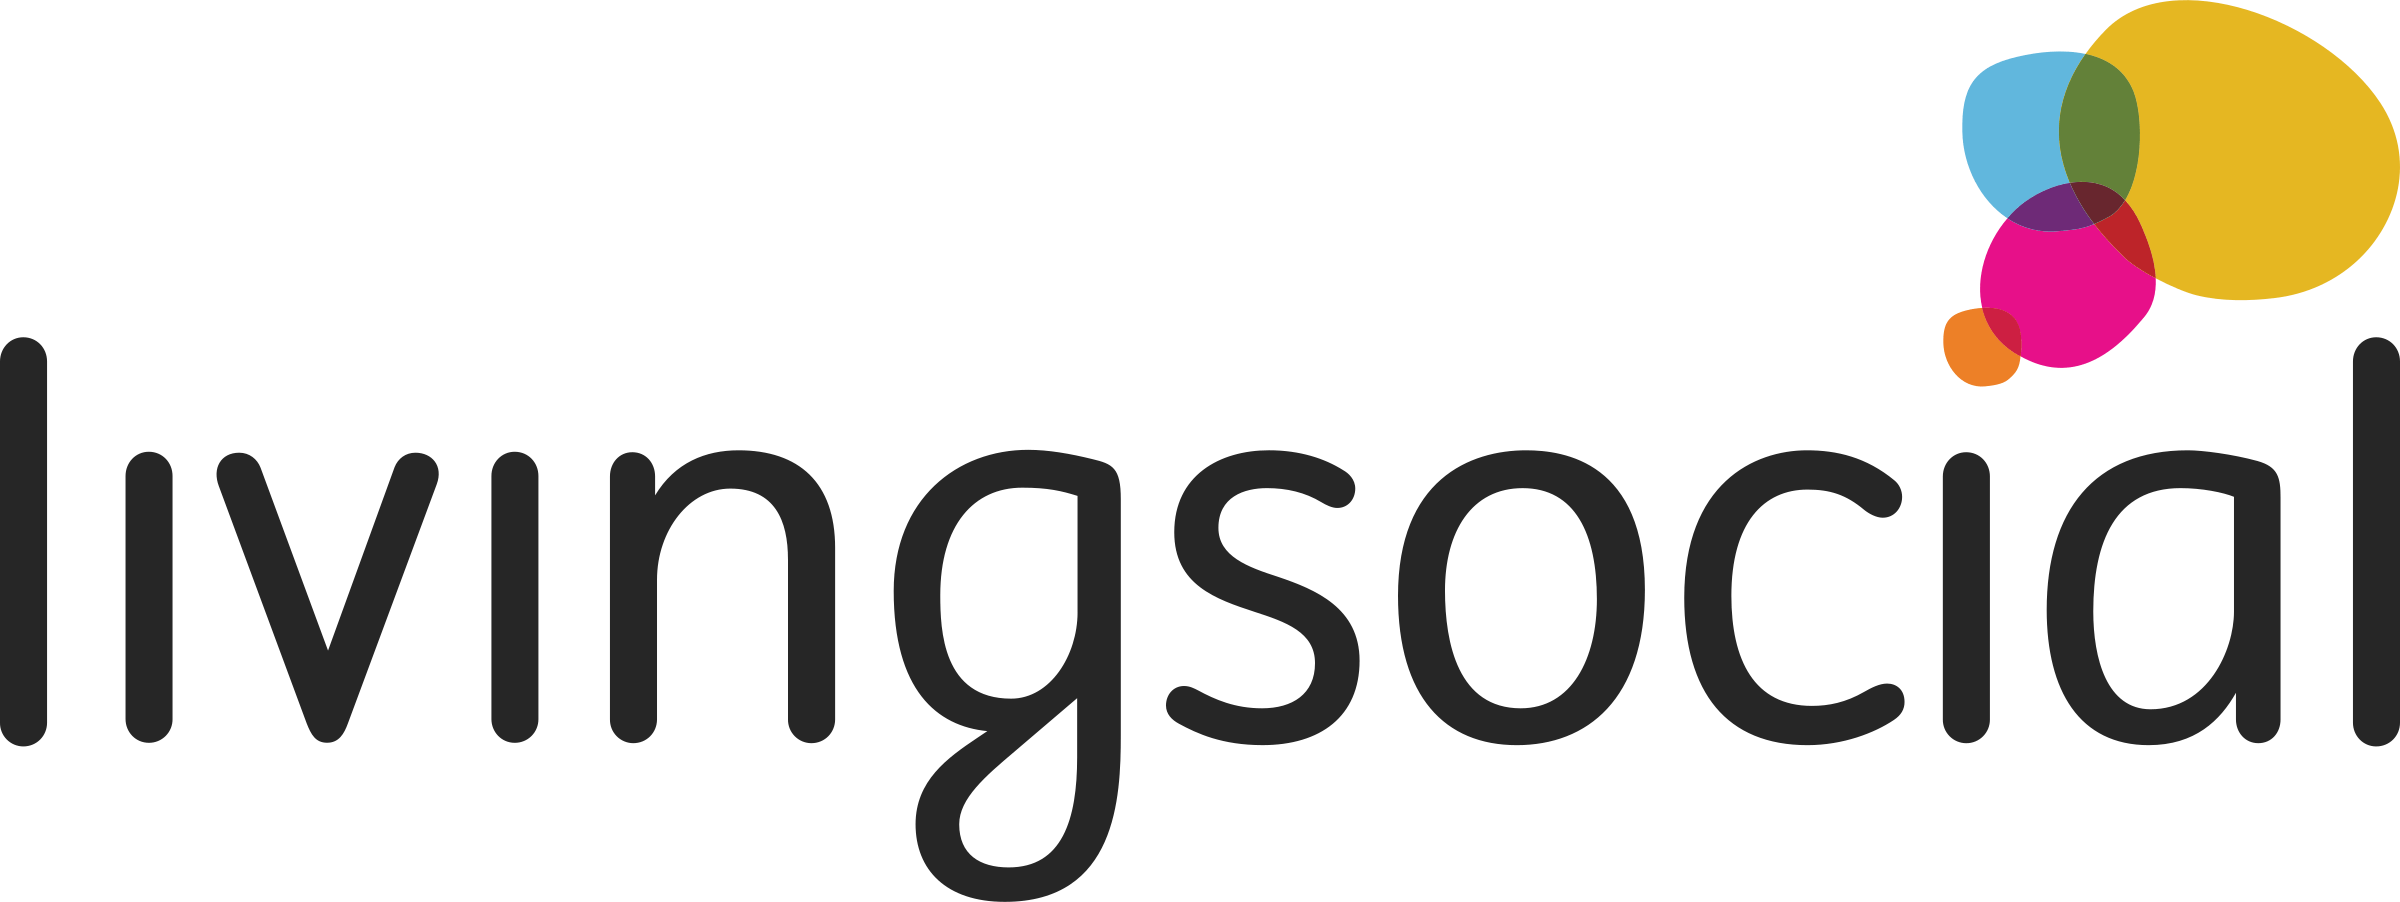 LivingSocial Logo - LivingSocial Logo PNG Transparent & SVG Vector